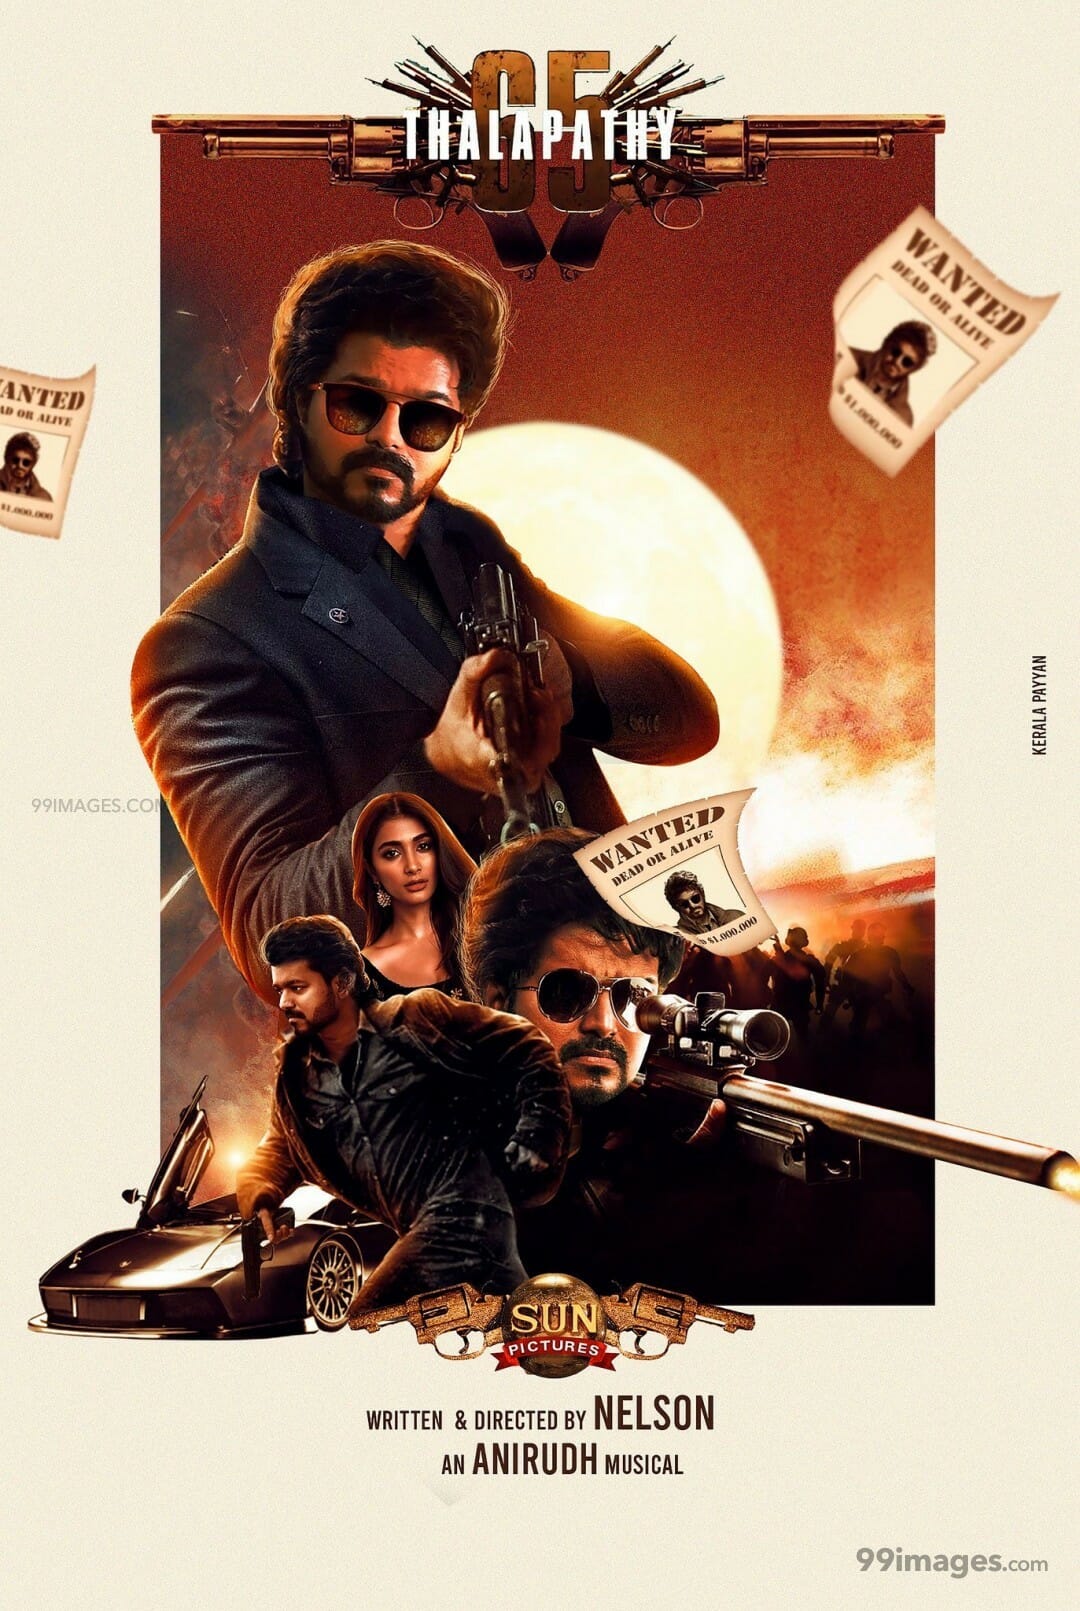 Tamil 4K Movies Wallpapers